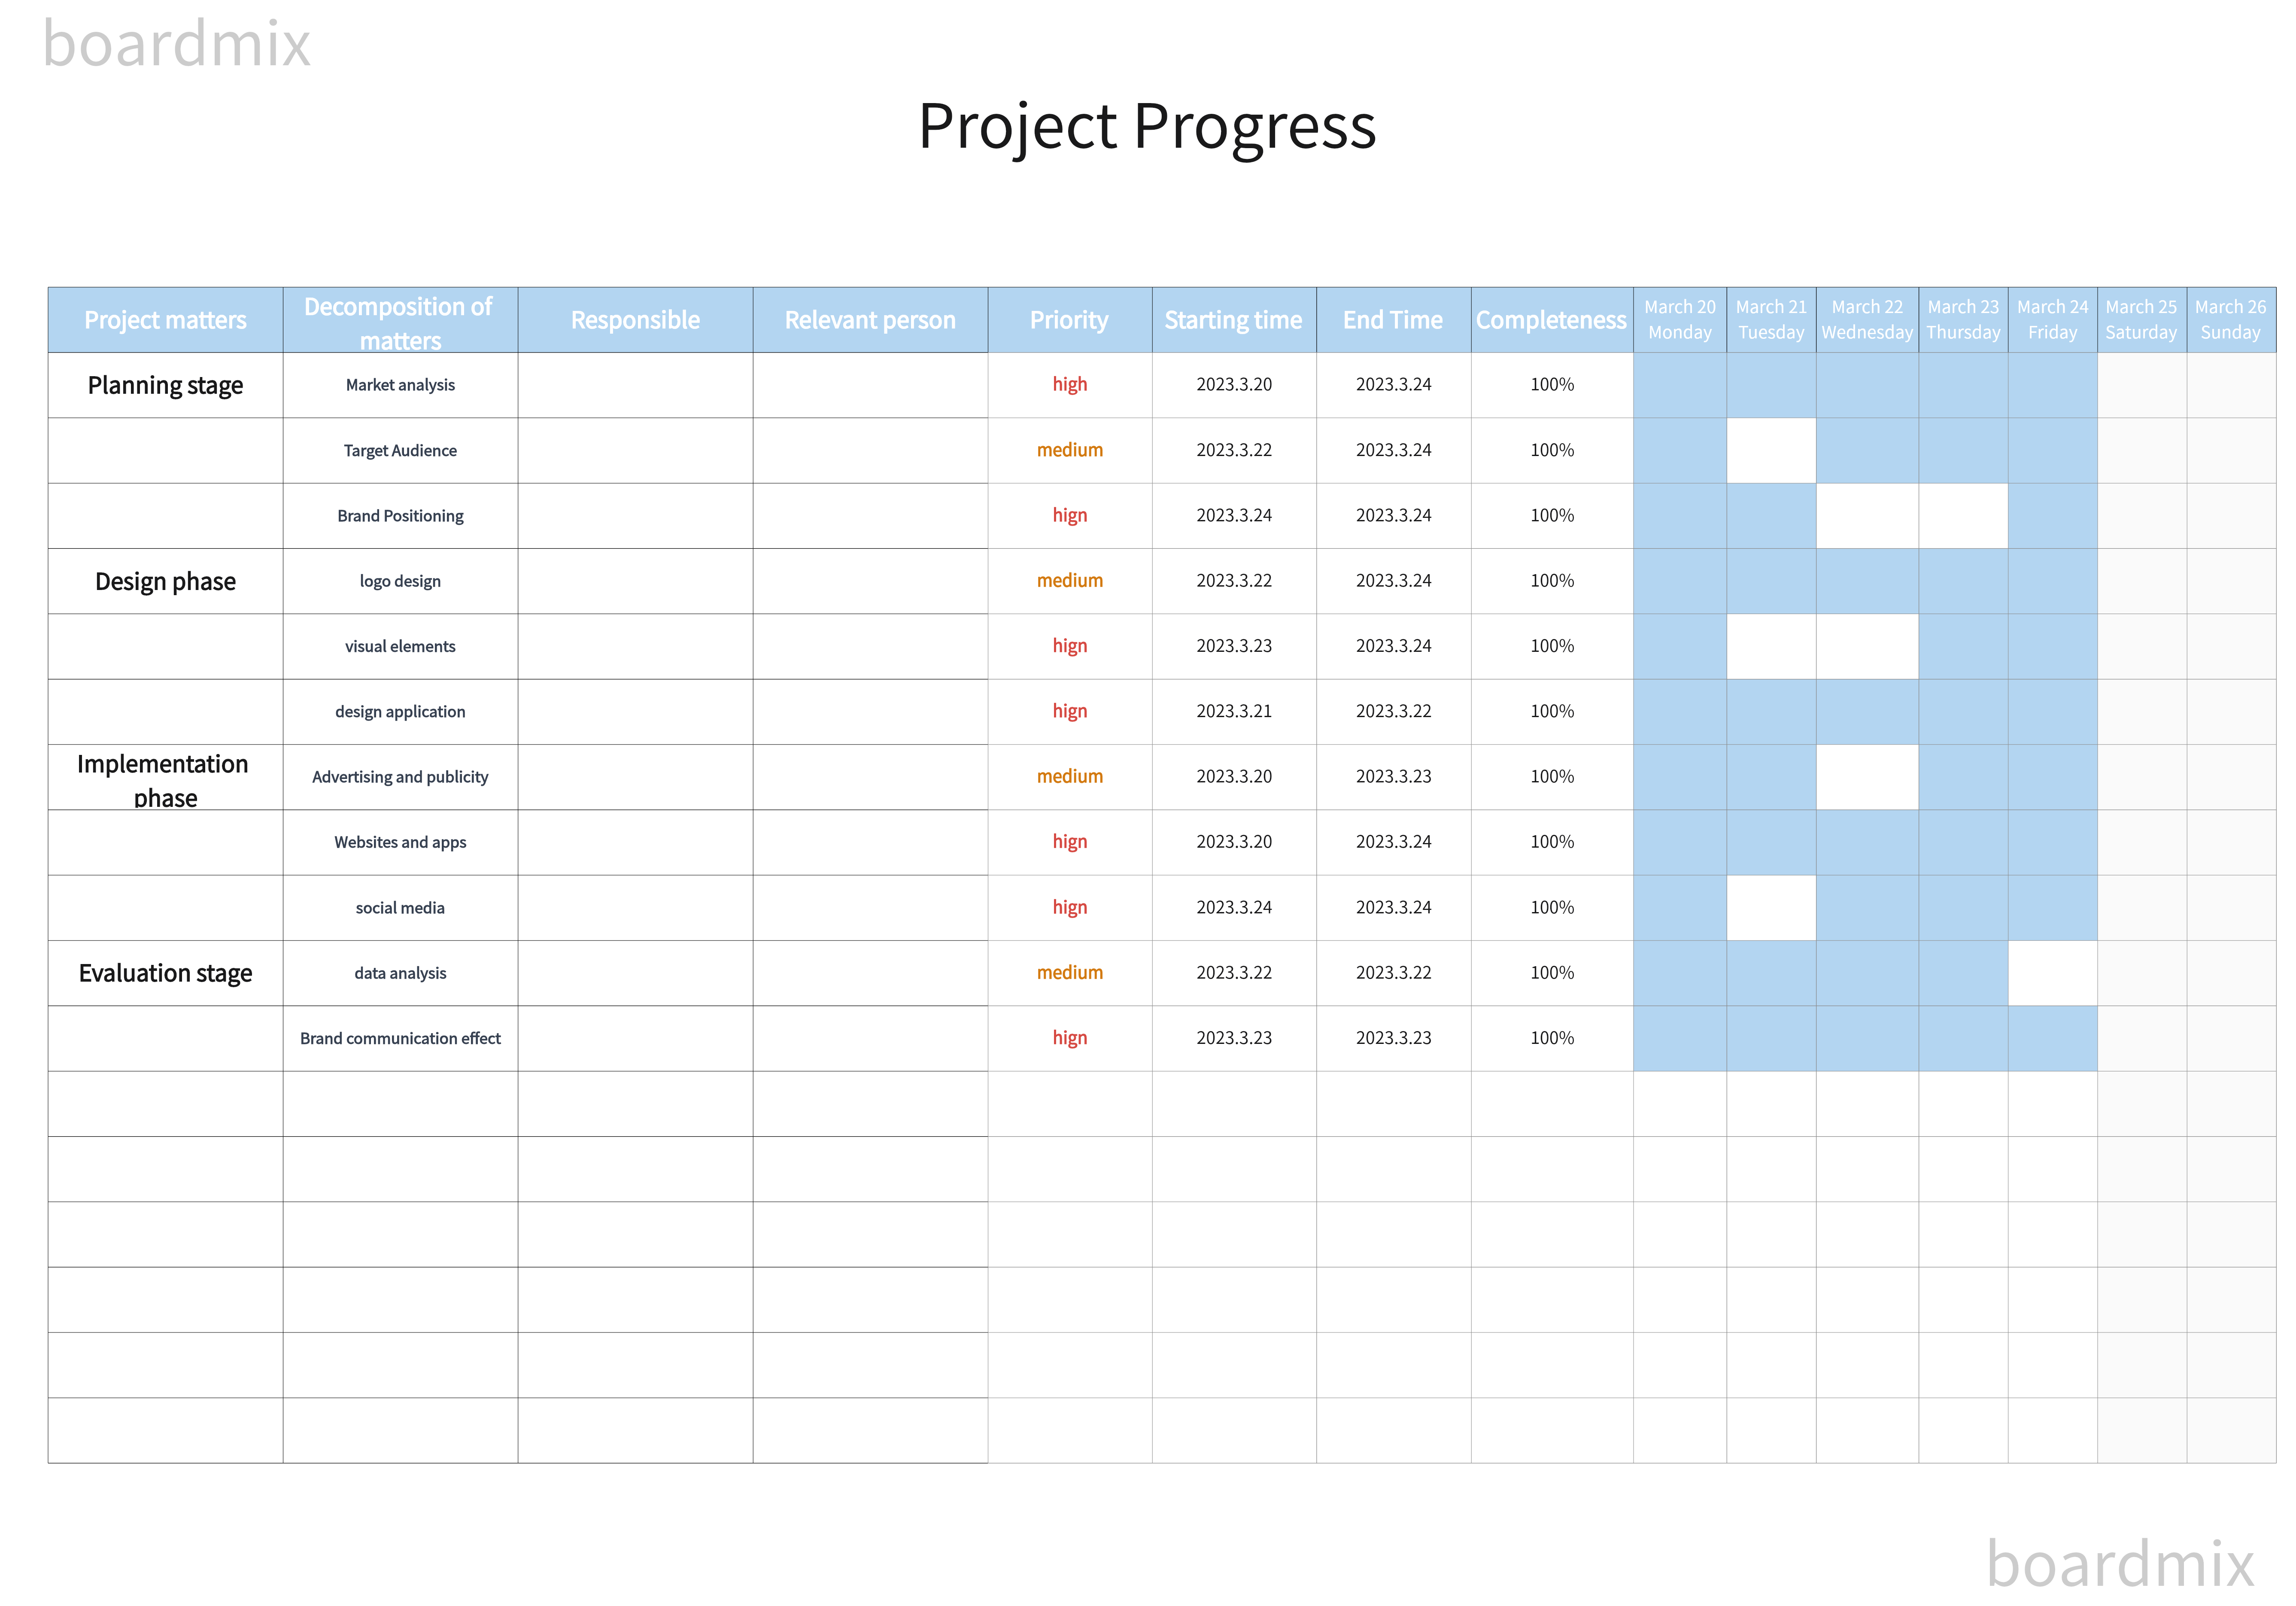 project-progress-boardmix